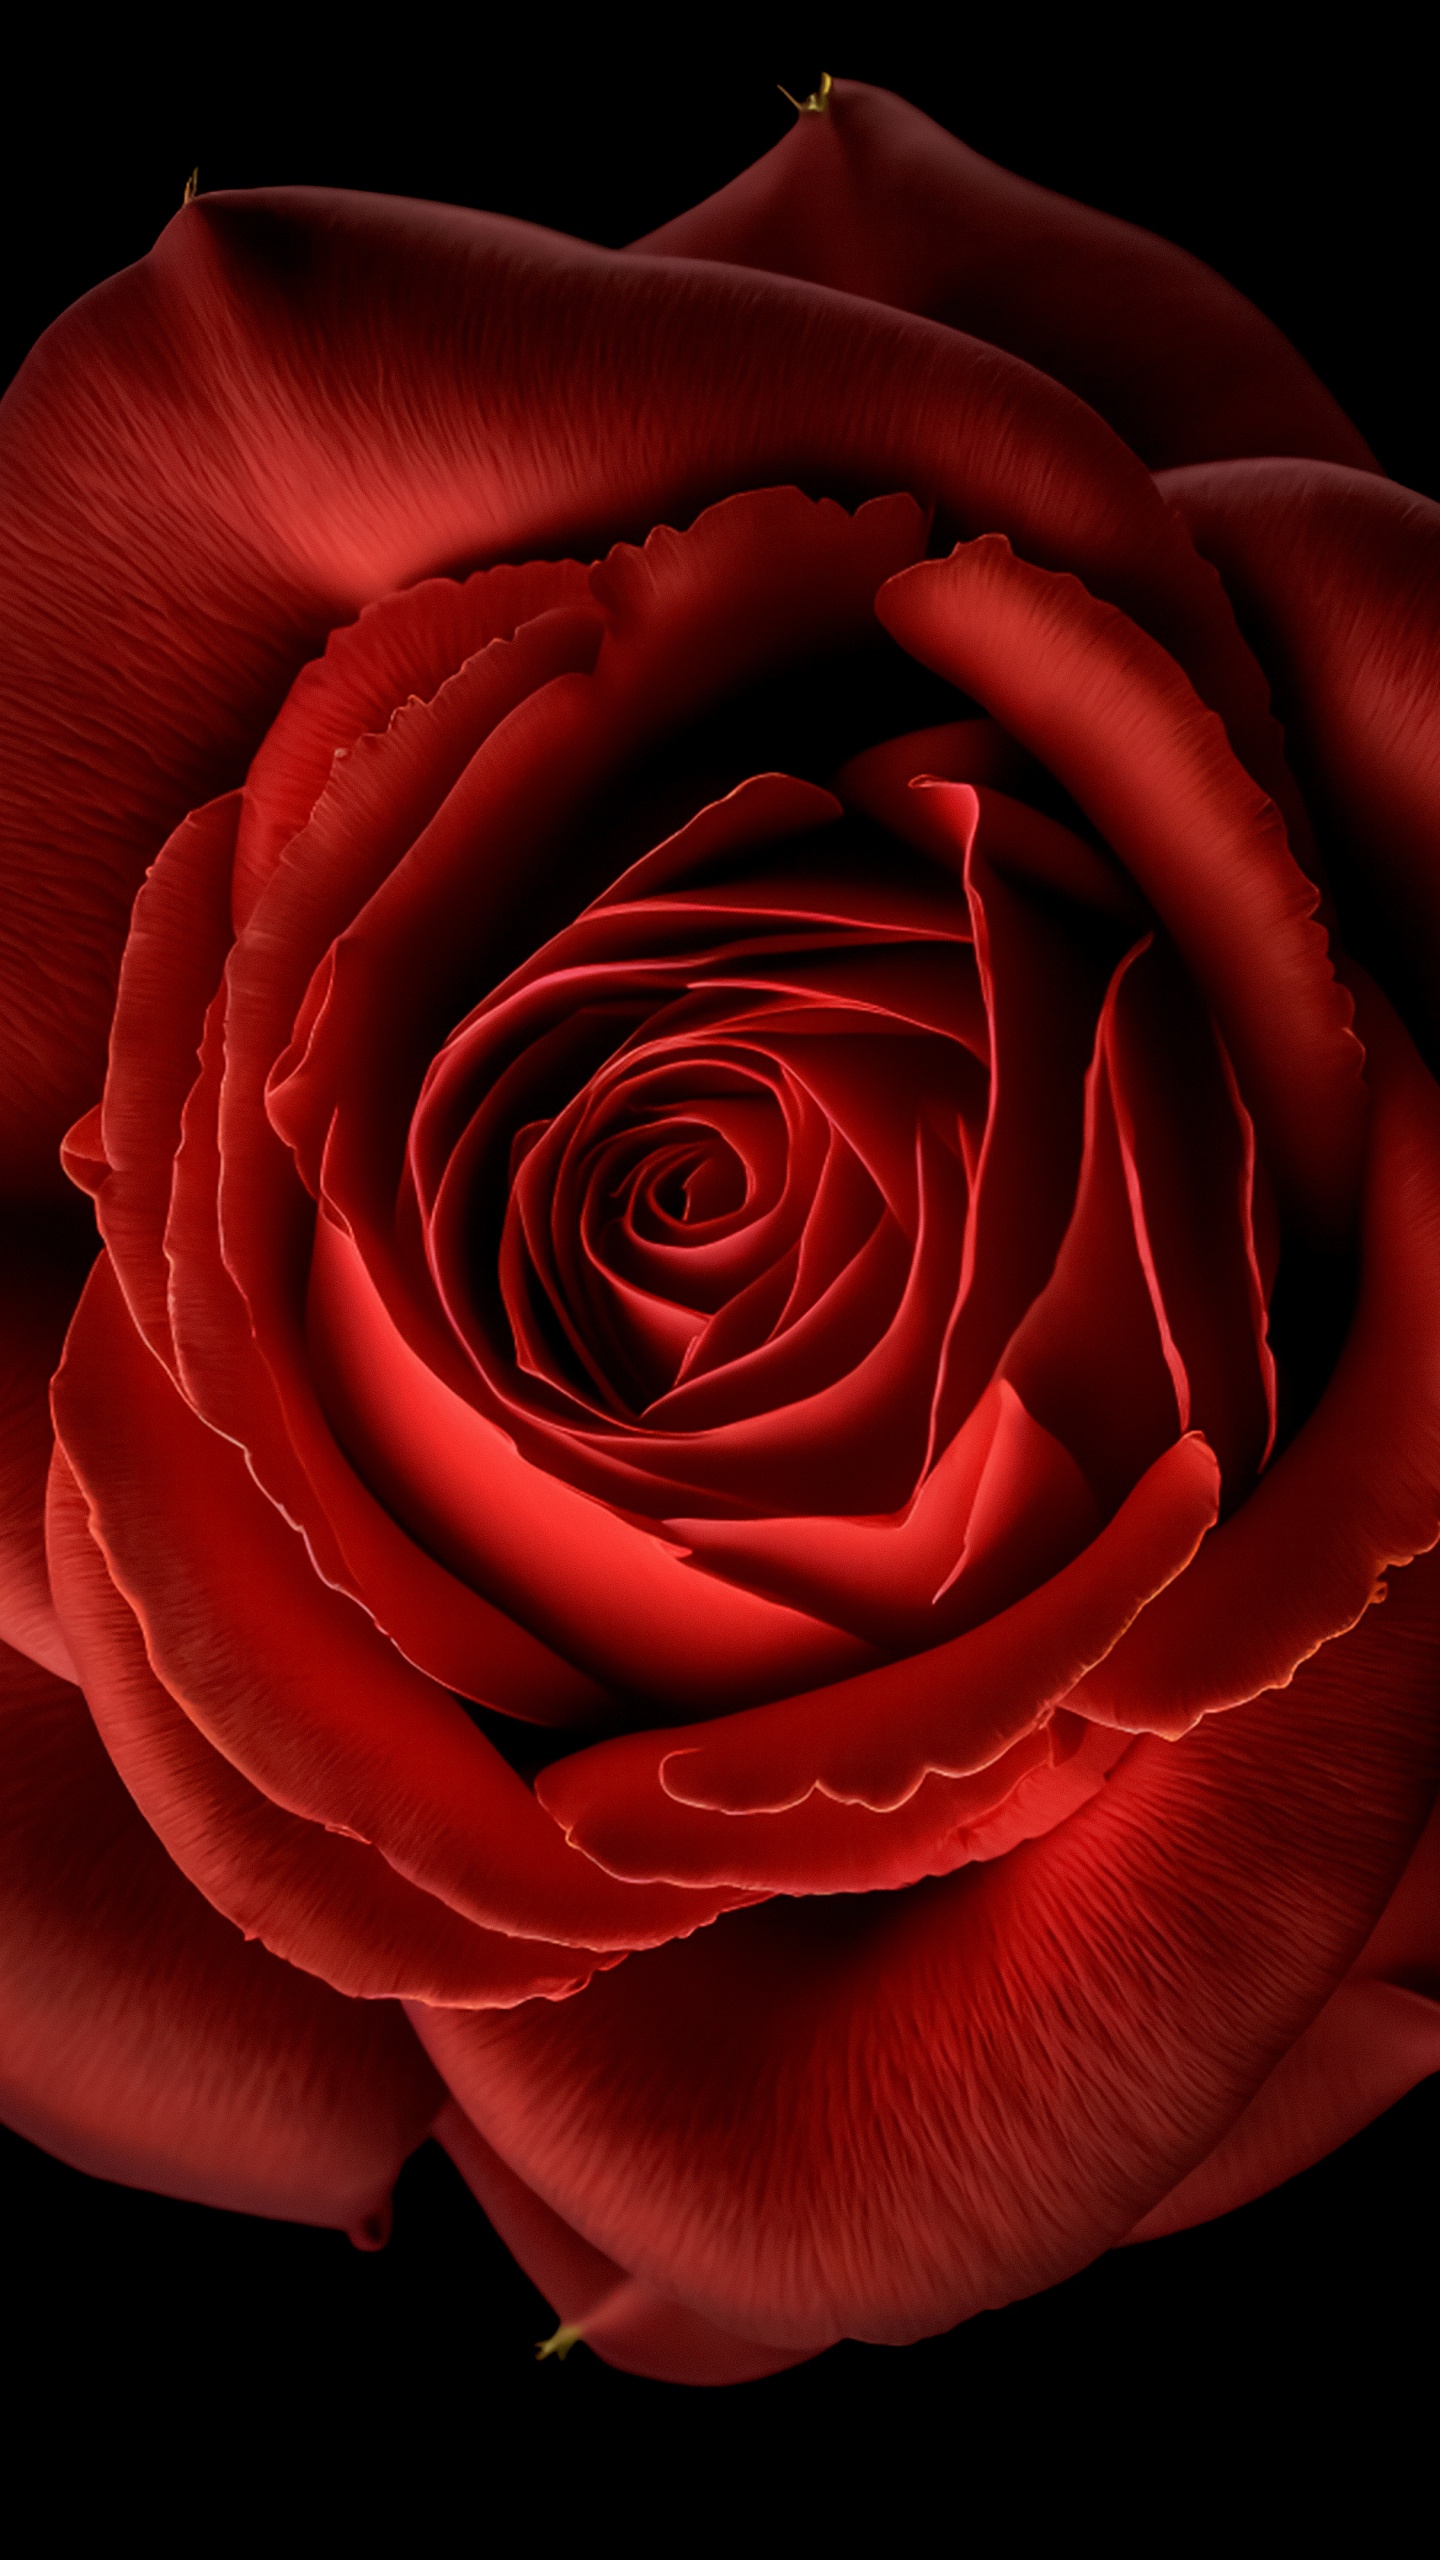 1000 Rose In Black Background Pictures  Download Free Images on Unsplash